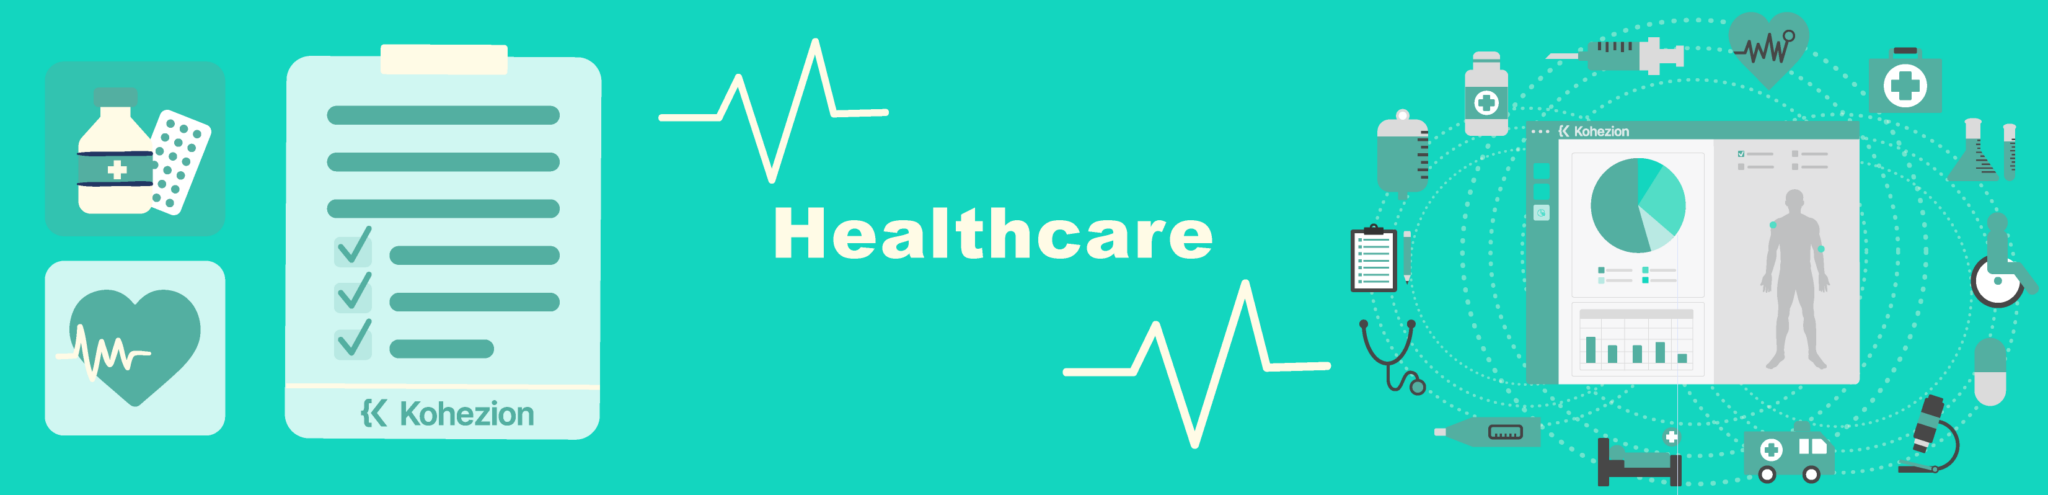 Healthcare-banner